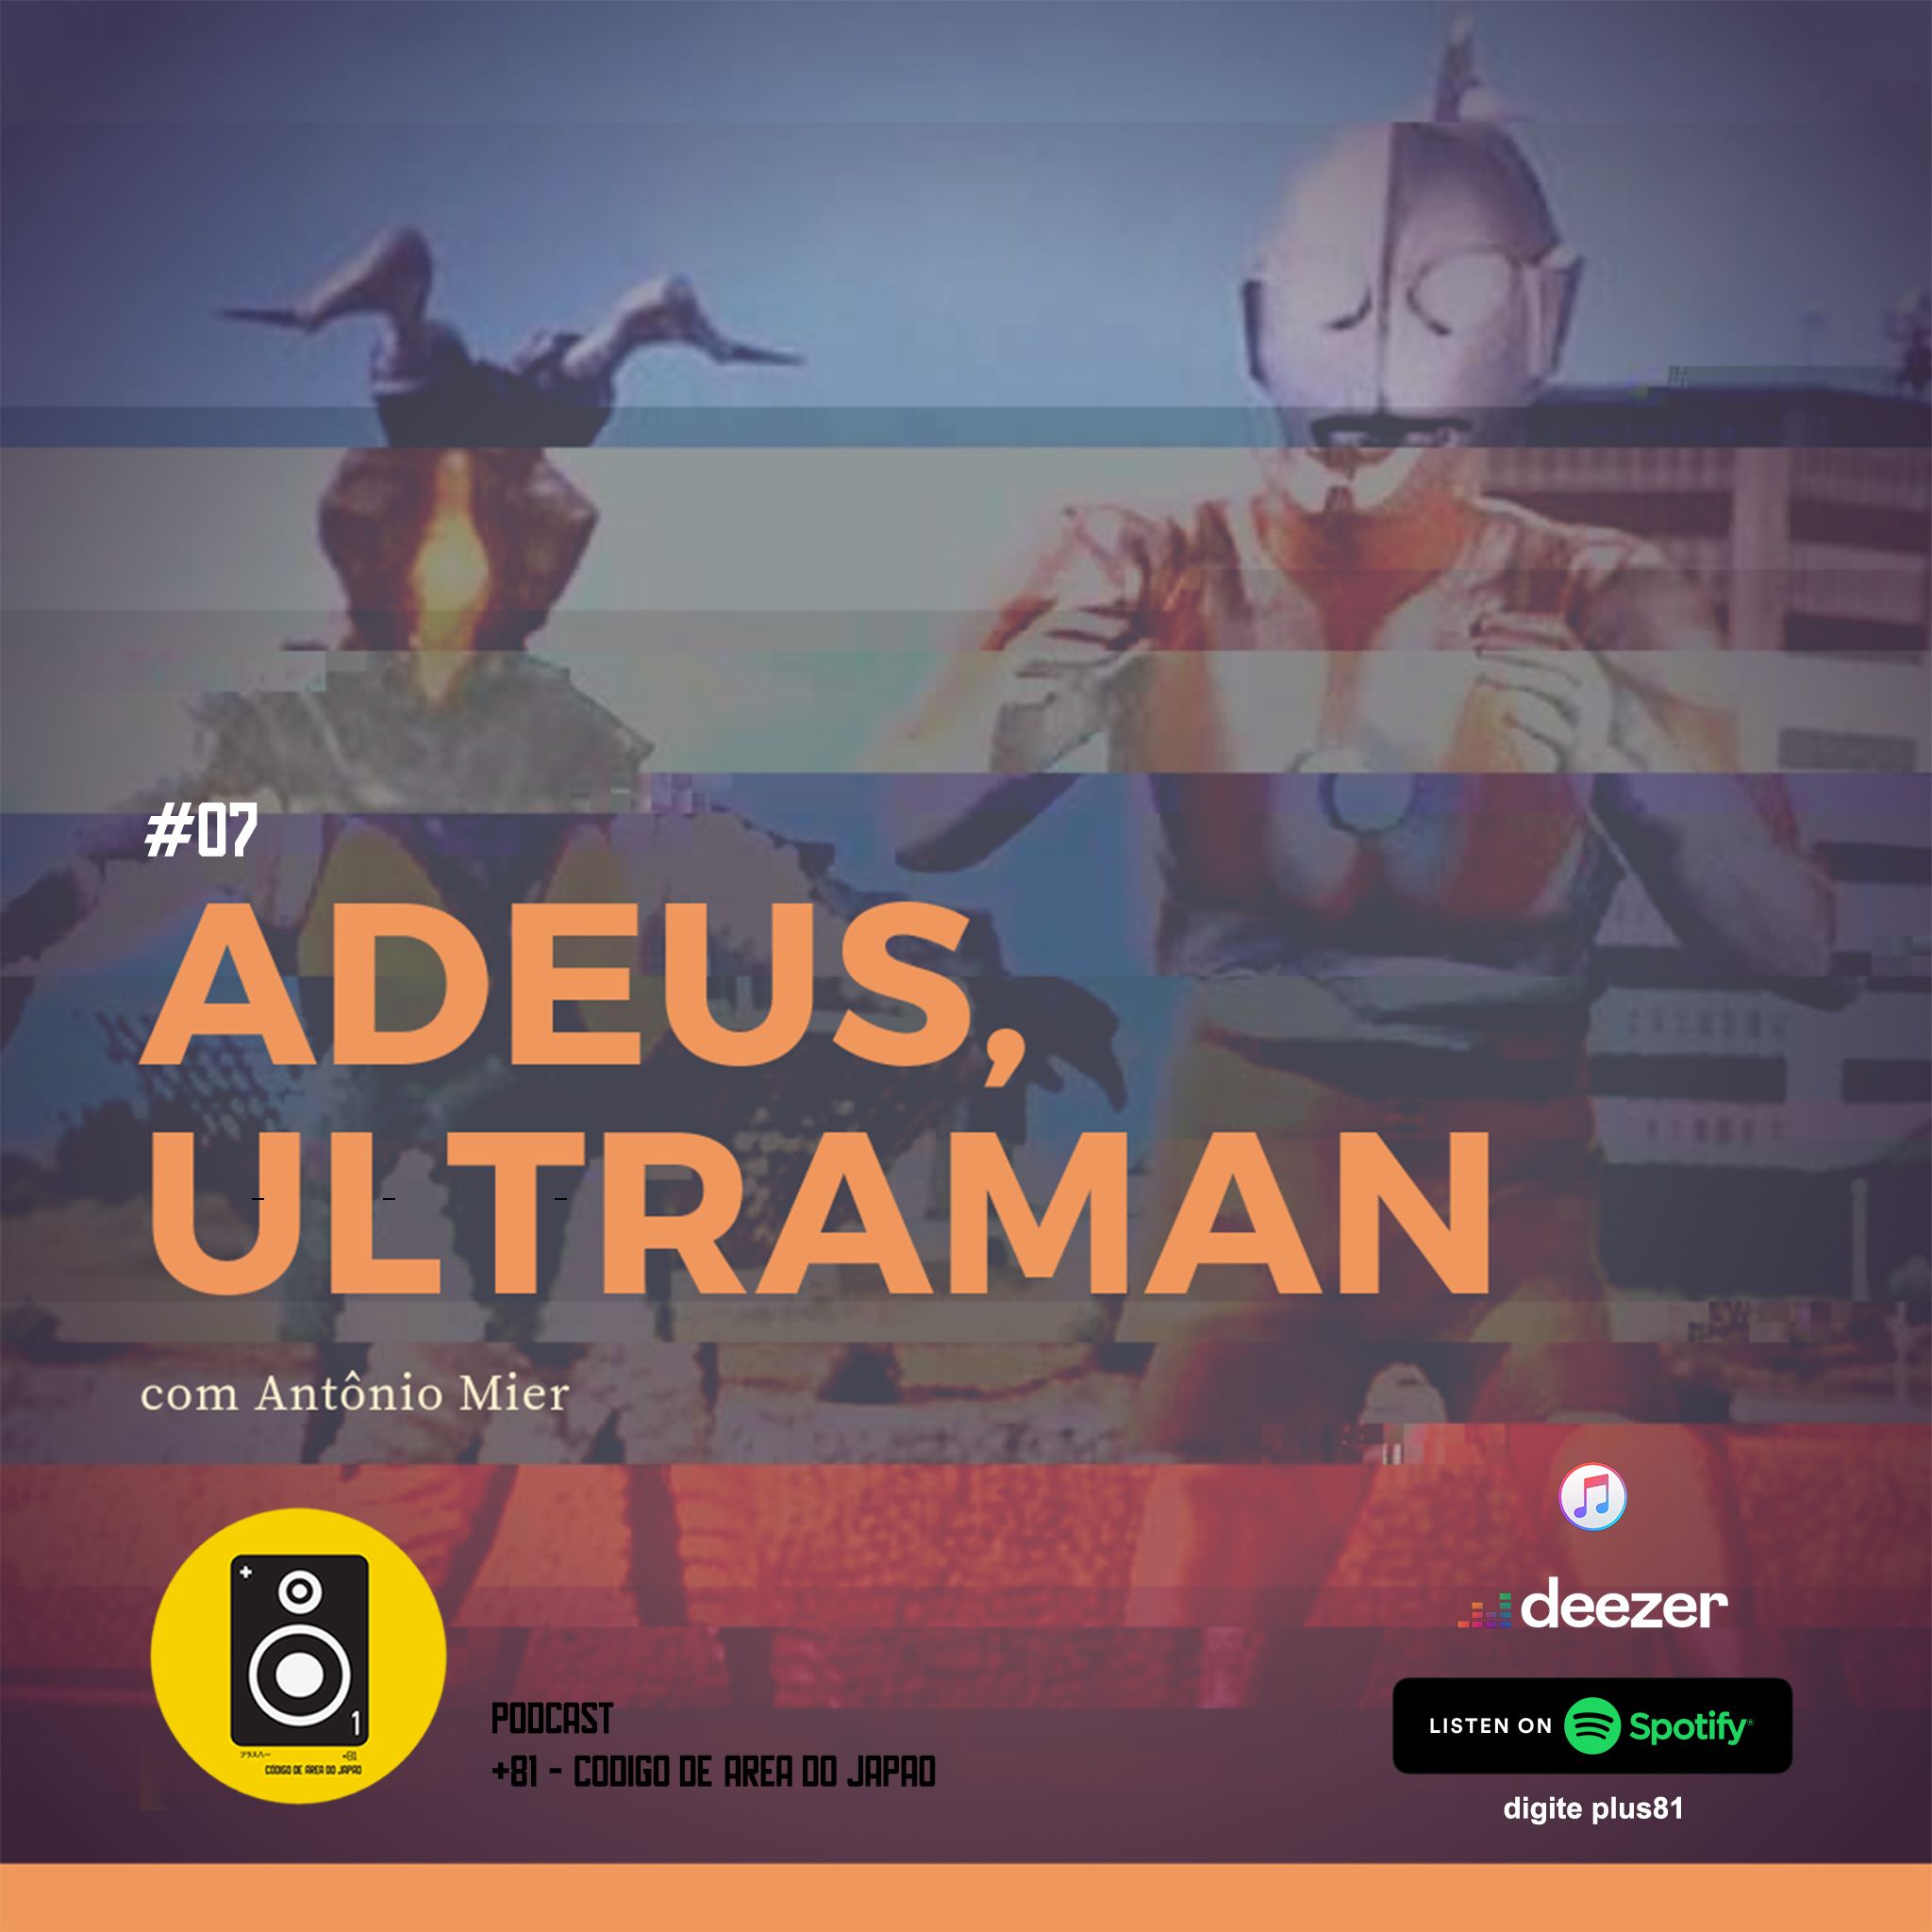 #07 "Adeus, Ultraman" com Antônio Mier